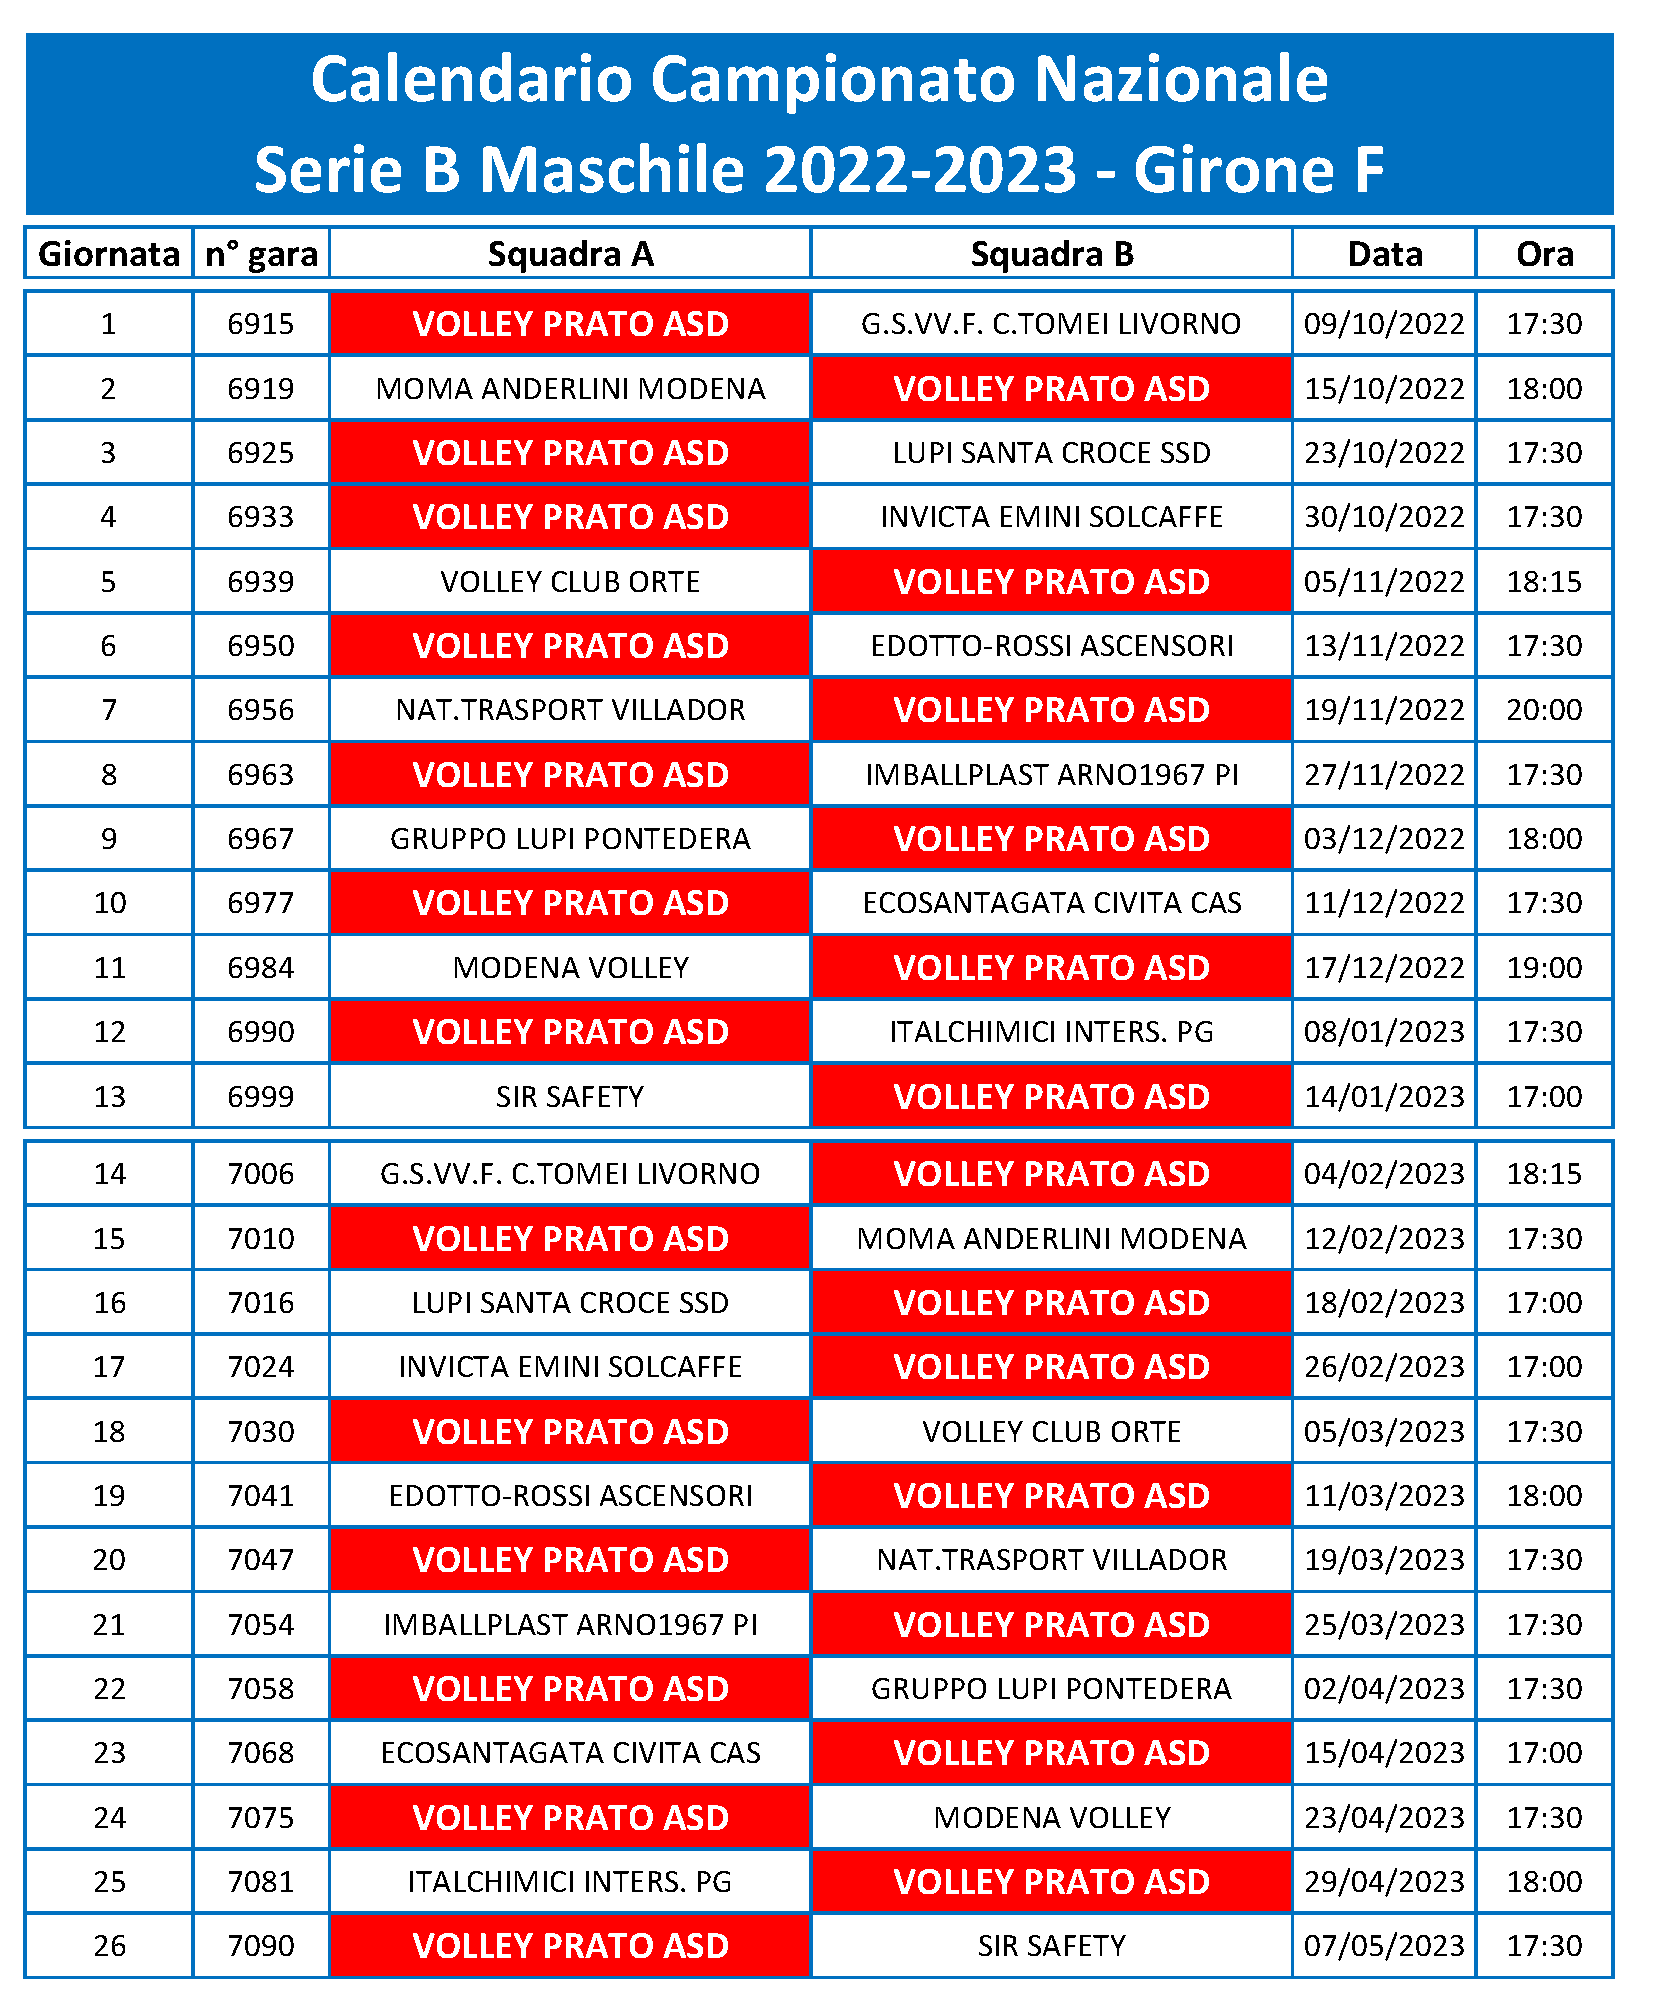 B - Calendario Serie B 2022-2023lungopng